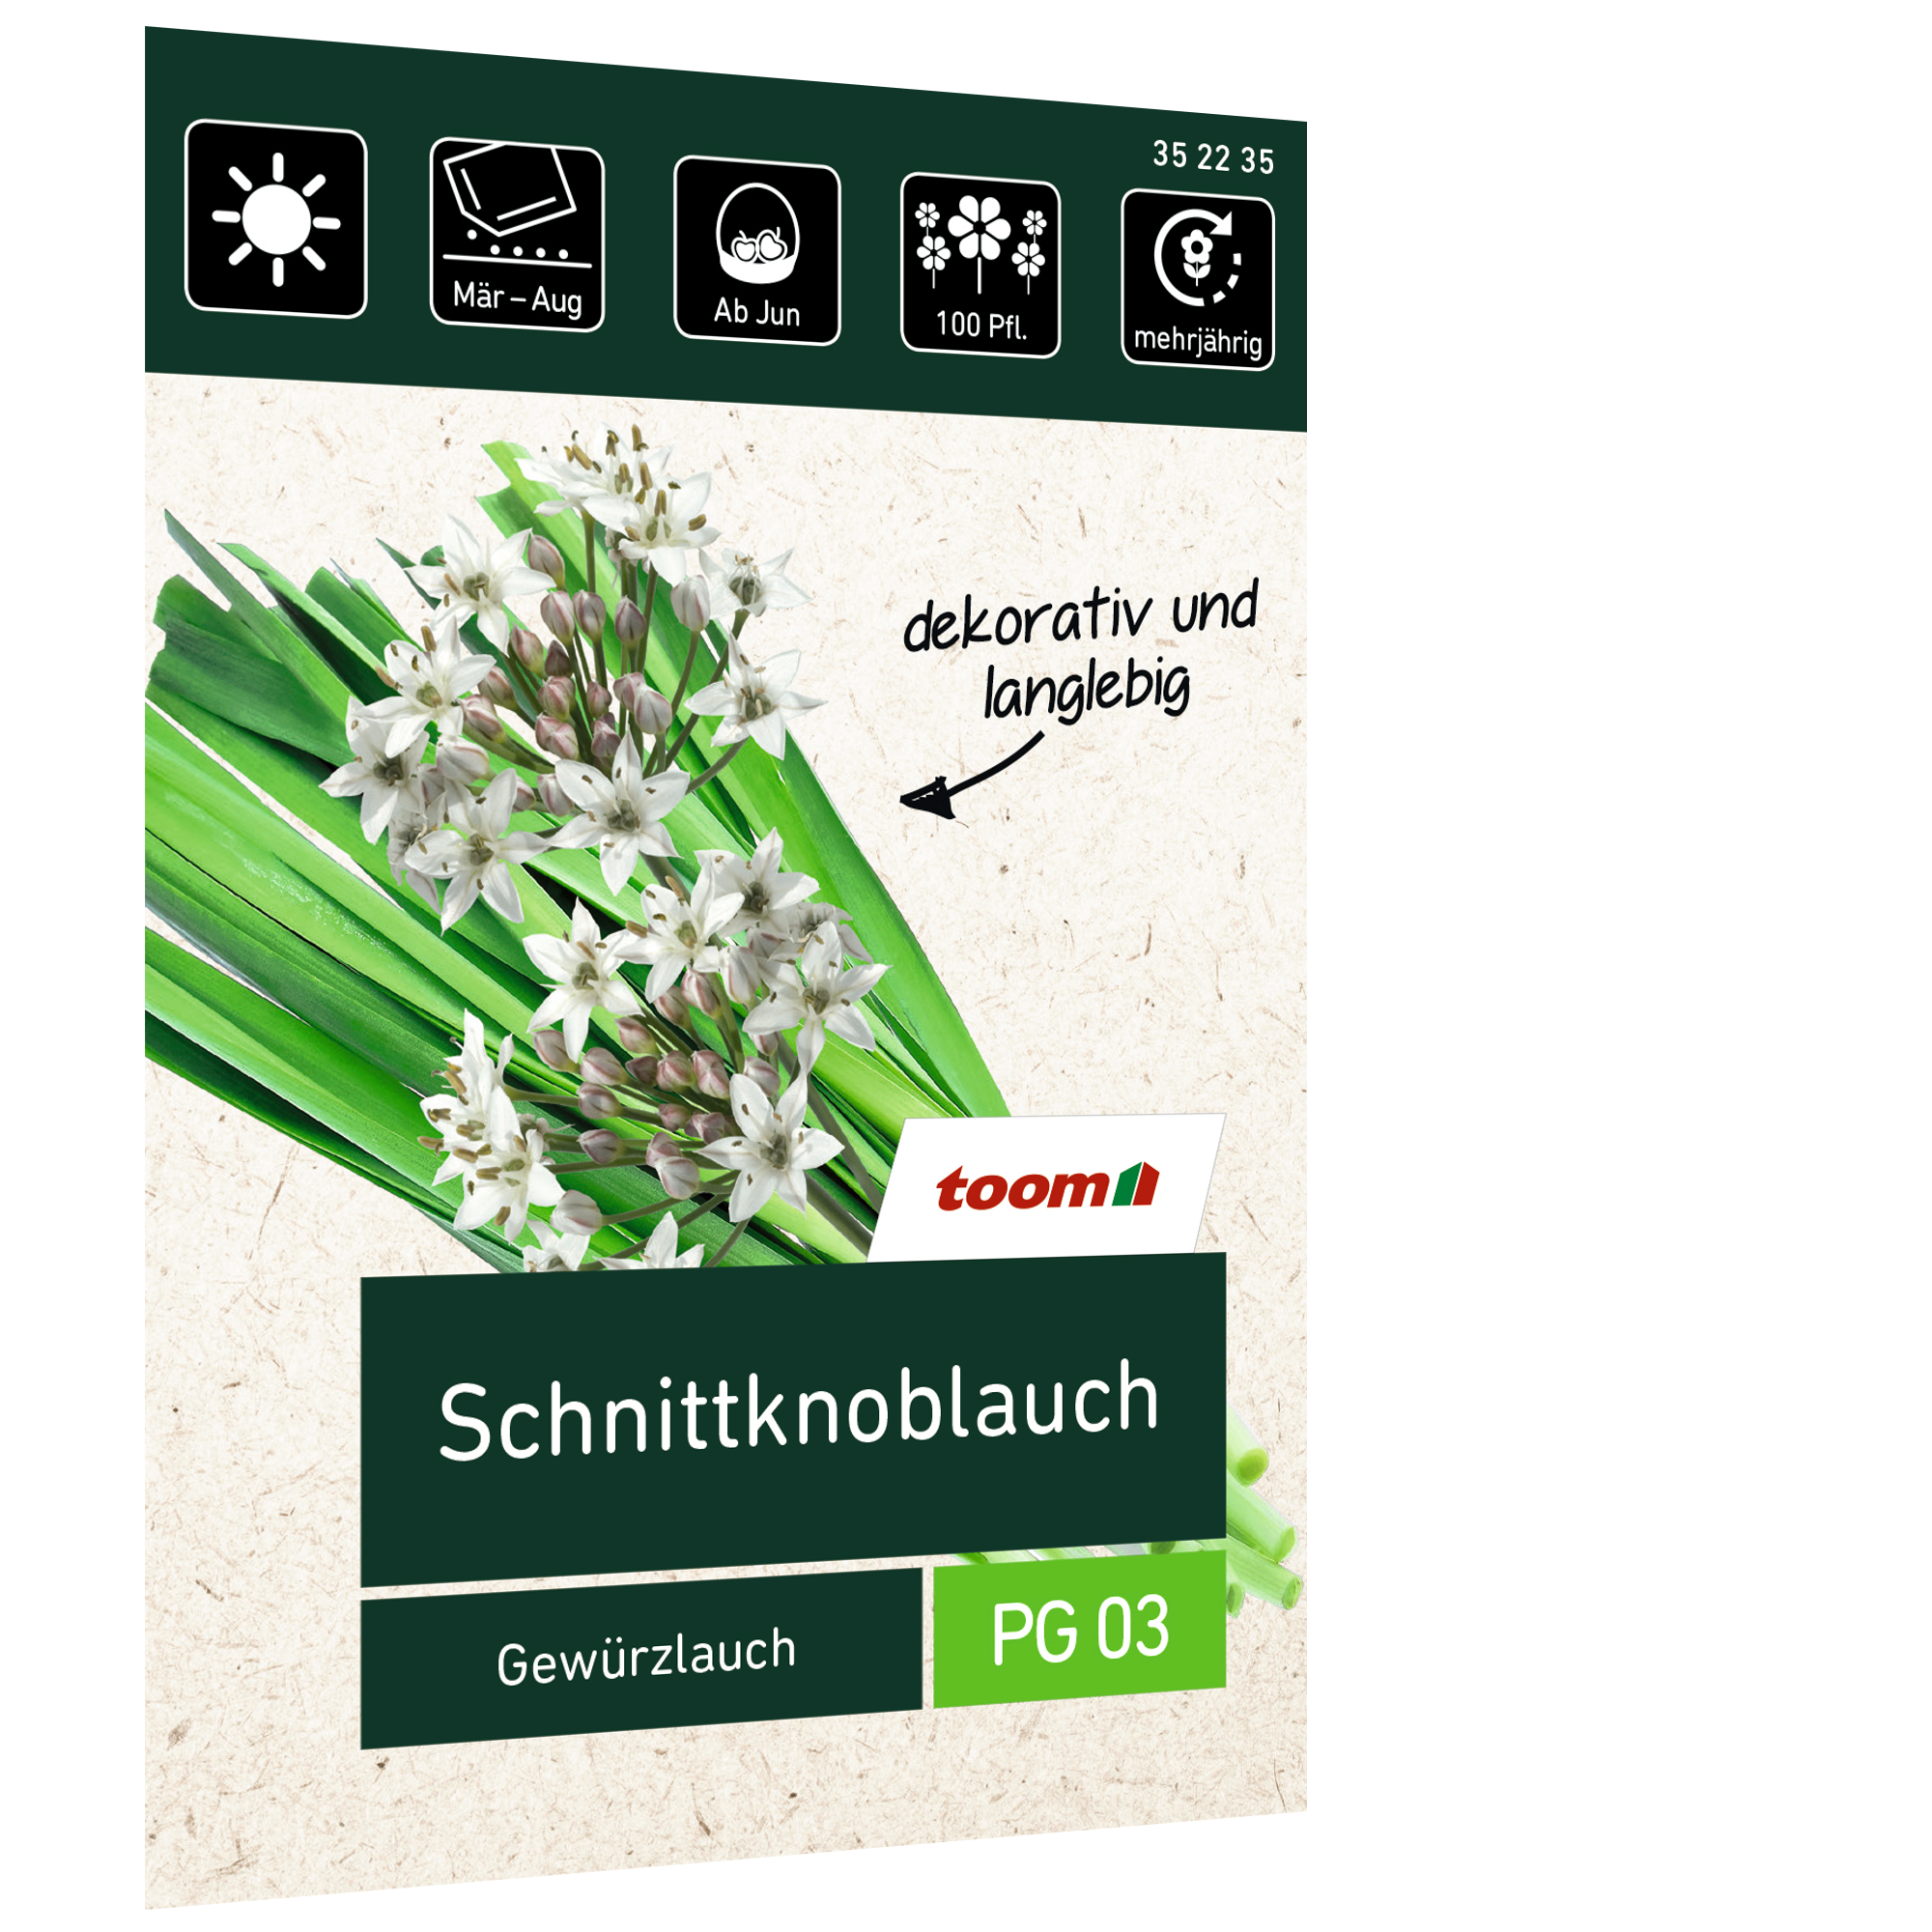 Schnittknoblauch 'Gewürzlauch' + product picture